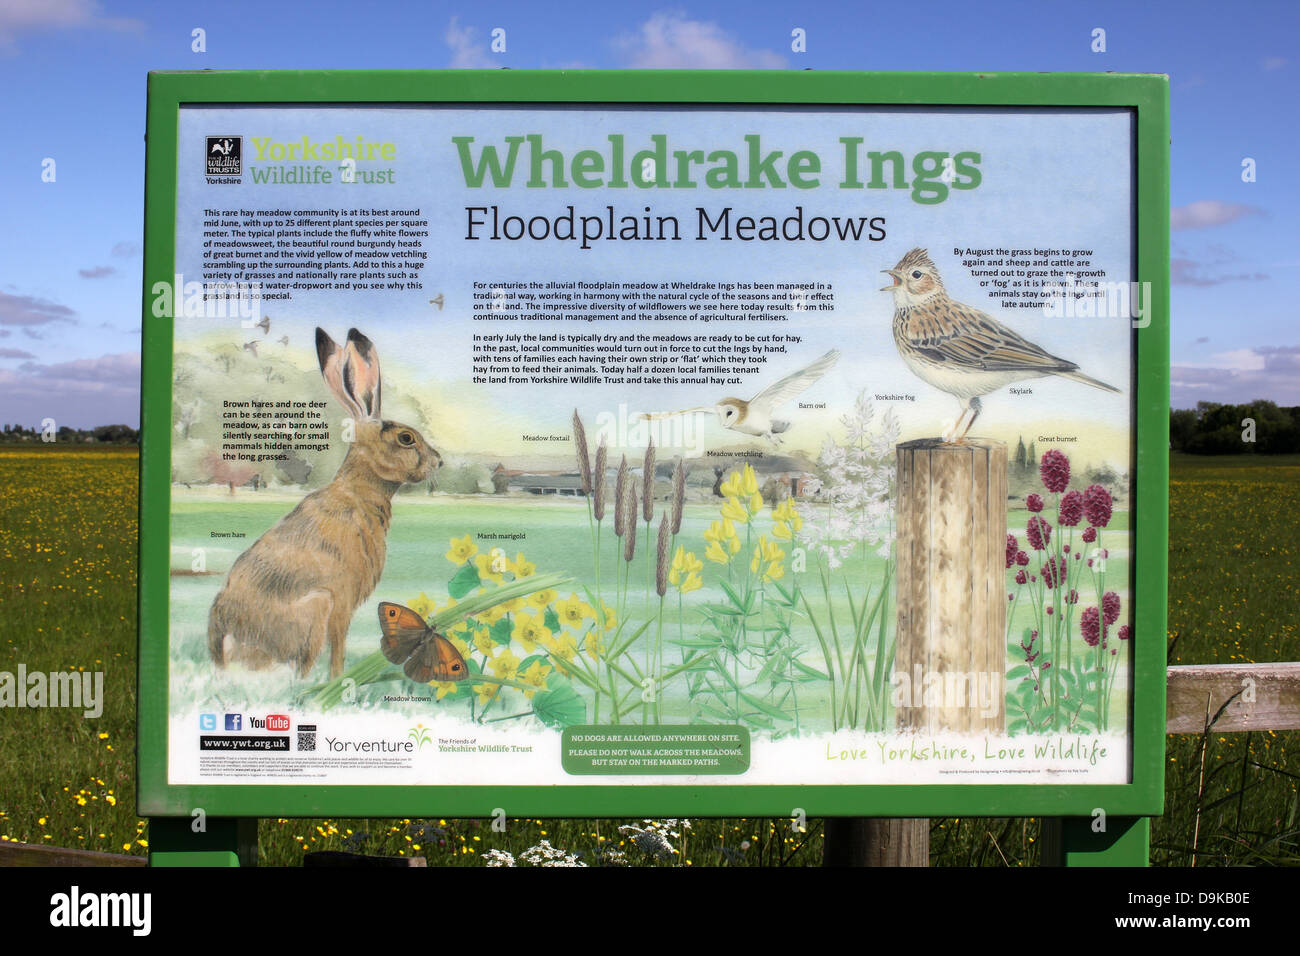 Wheldrake Ings - Yorkshire Wildlife Trust Reserve Floodplain Meadows Information board Stock Photo